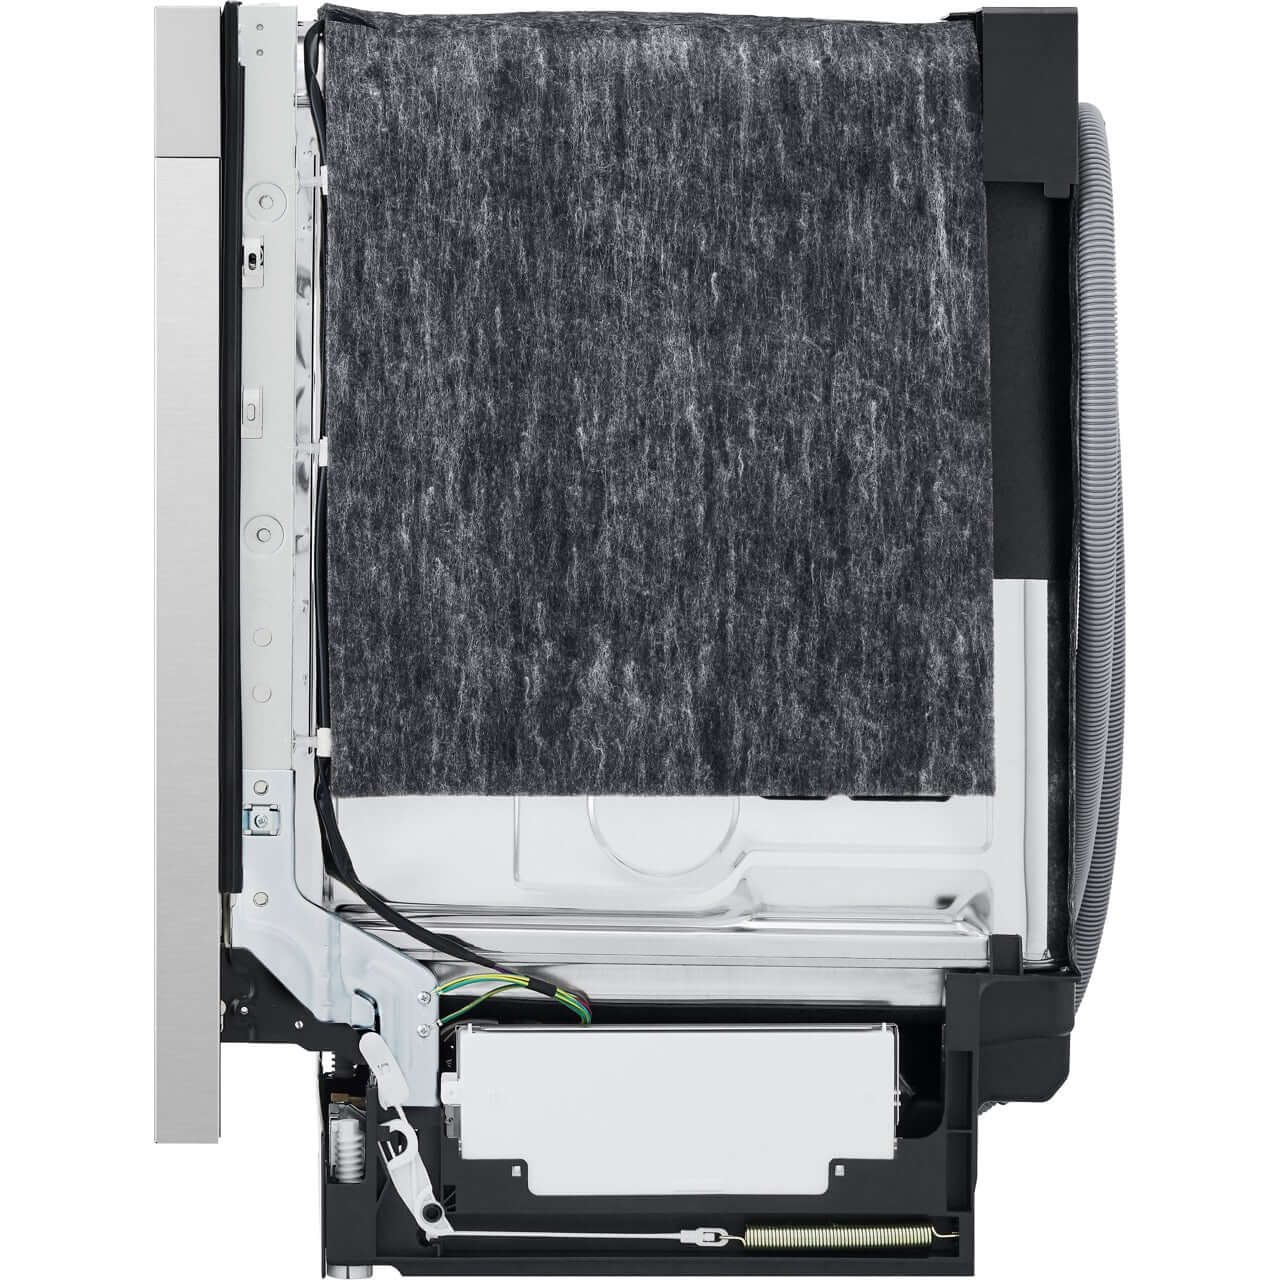 LG 24-Inch Electronics Front Control Dishwasher with QuadWash (LDFN3432T)